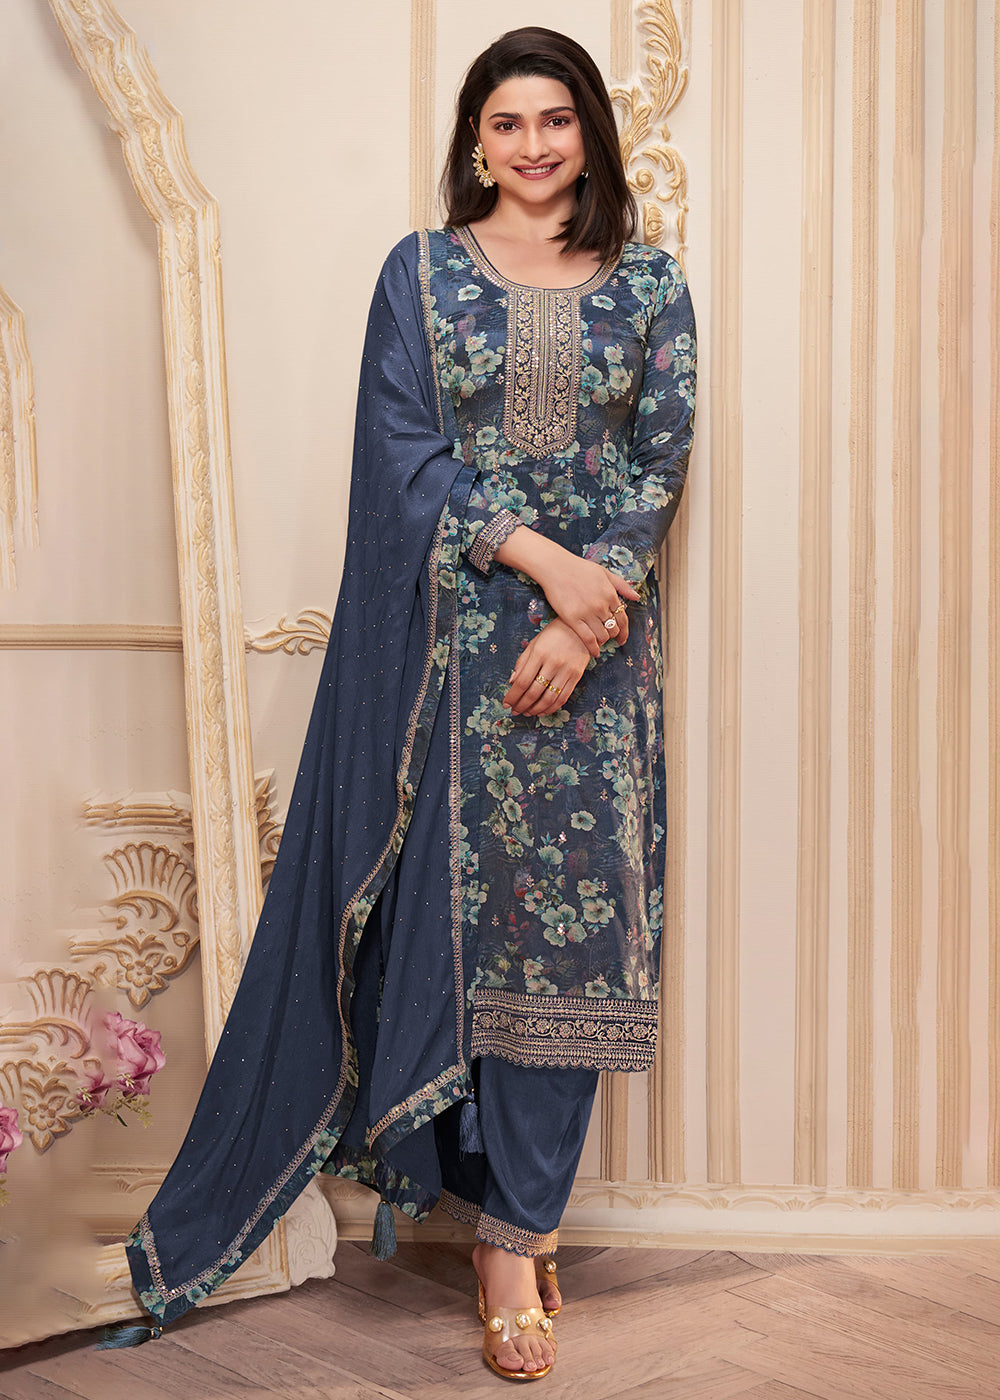 Buy Now Blue Digital Printed Chinnon Festive Salwar Kameez Online in USA, UK, Canada, Germany, Australia & Worldwide at Empress Clothing.